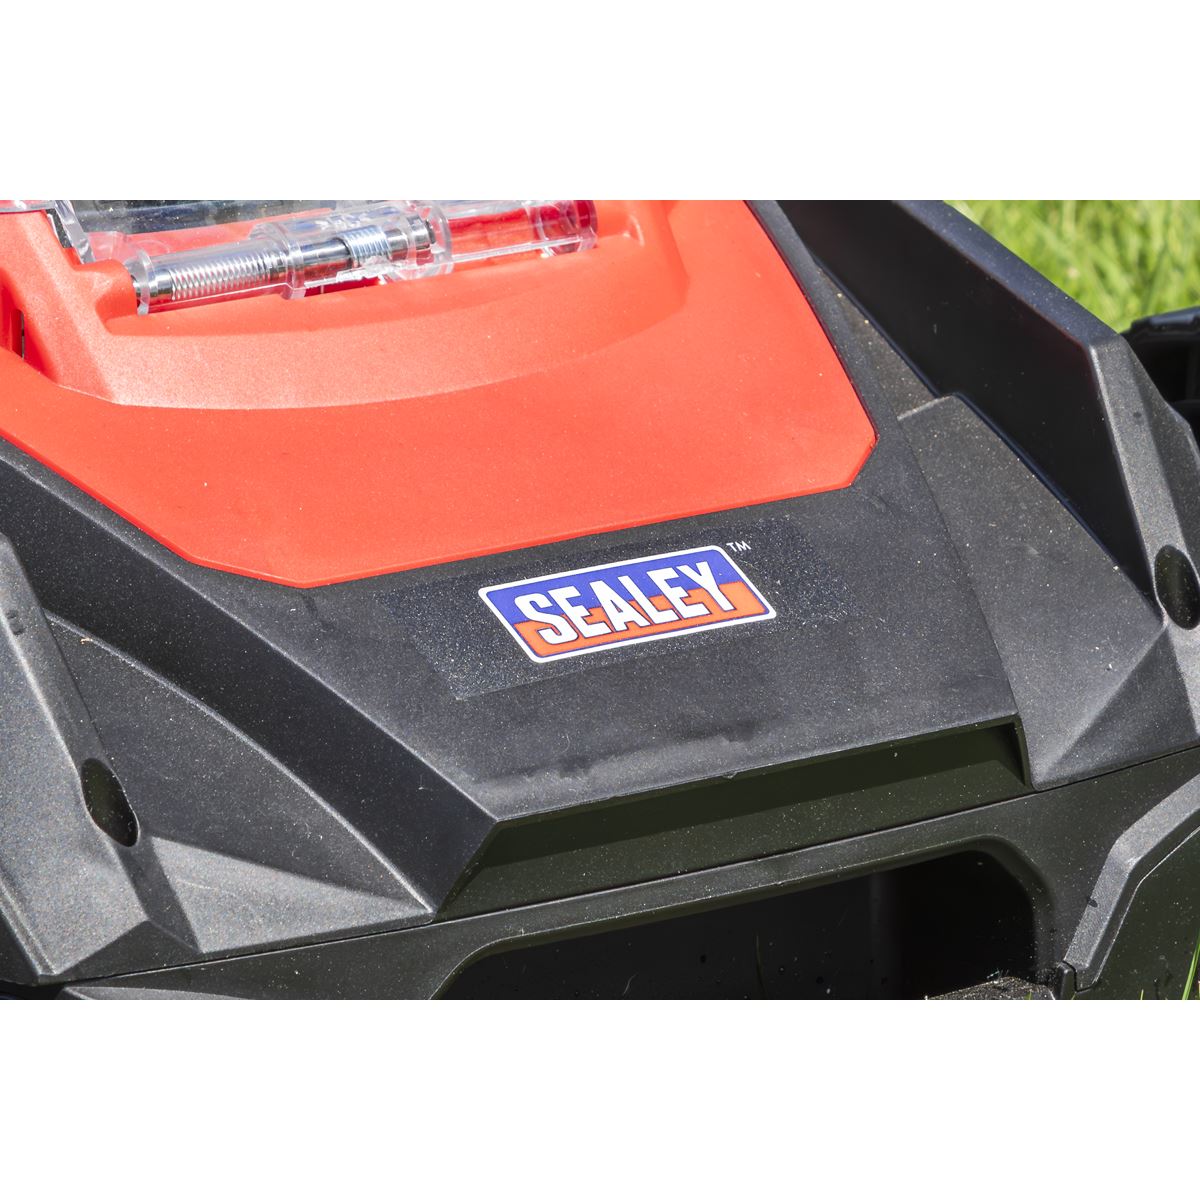 Sealey Cordless Lawn Mower 40V SV20 Series 40cm - Body Only